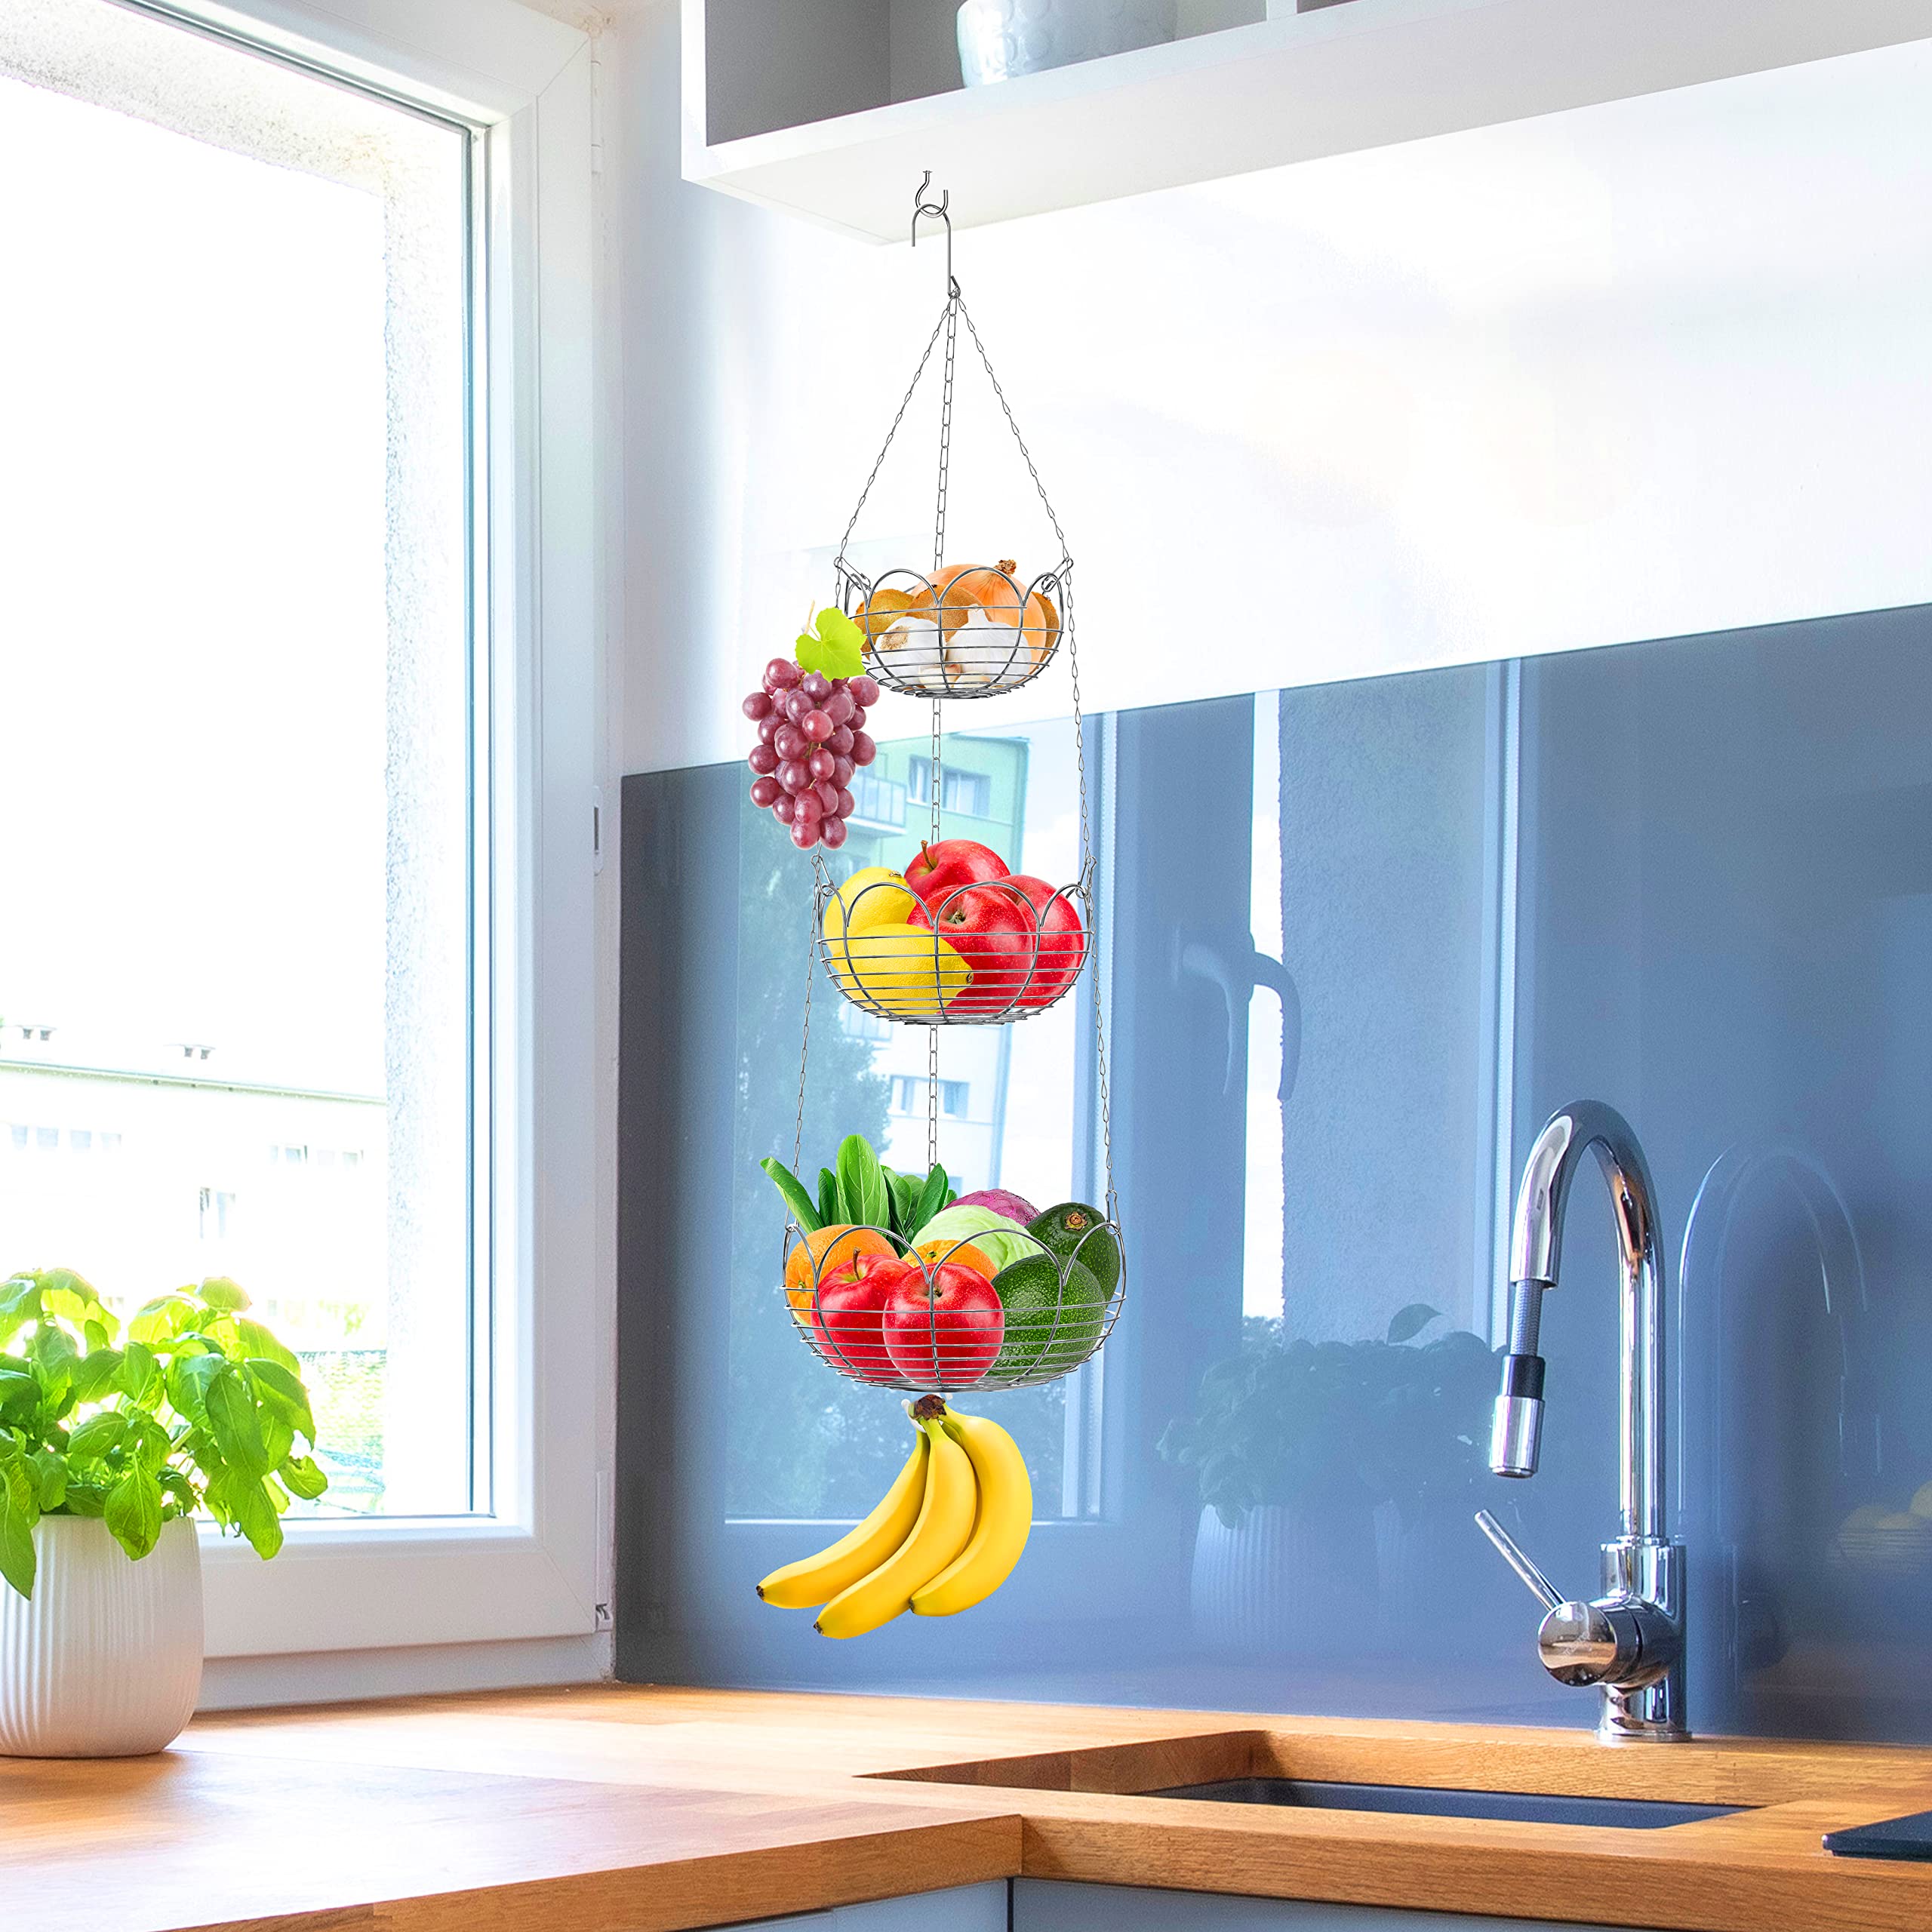 Simple Houseware Modern 3-Tier Hanging Fruit Basket, Chrome